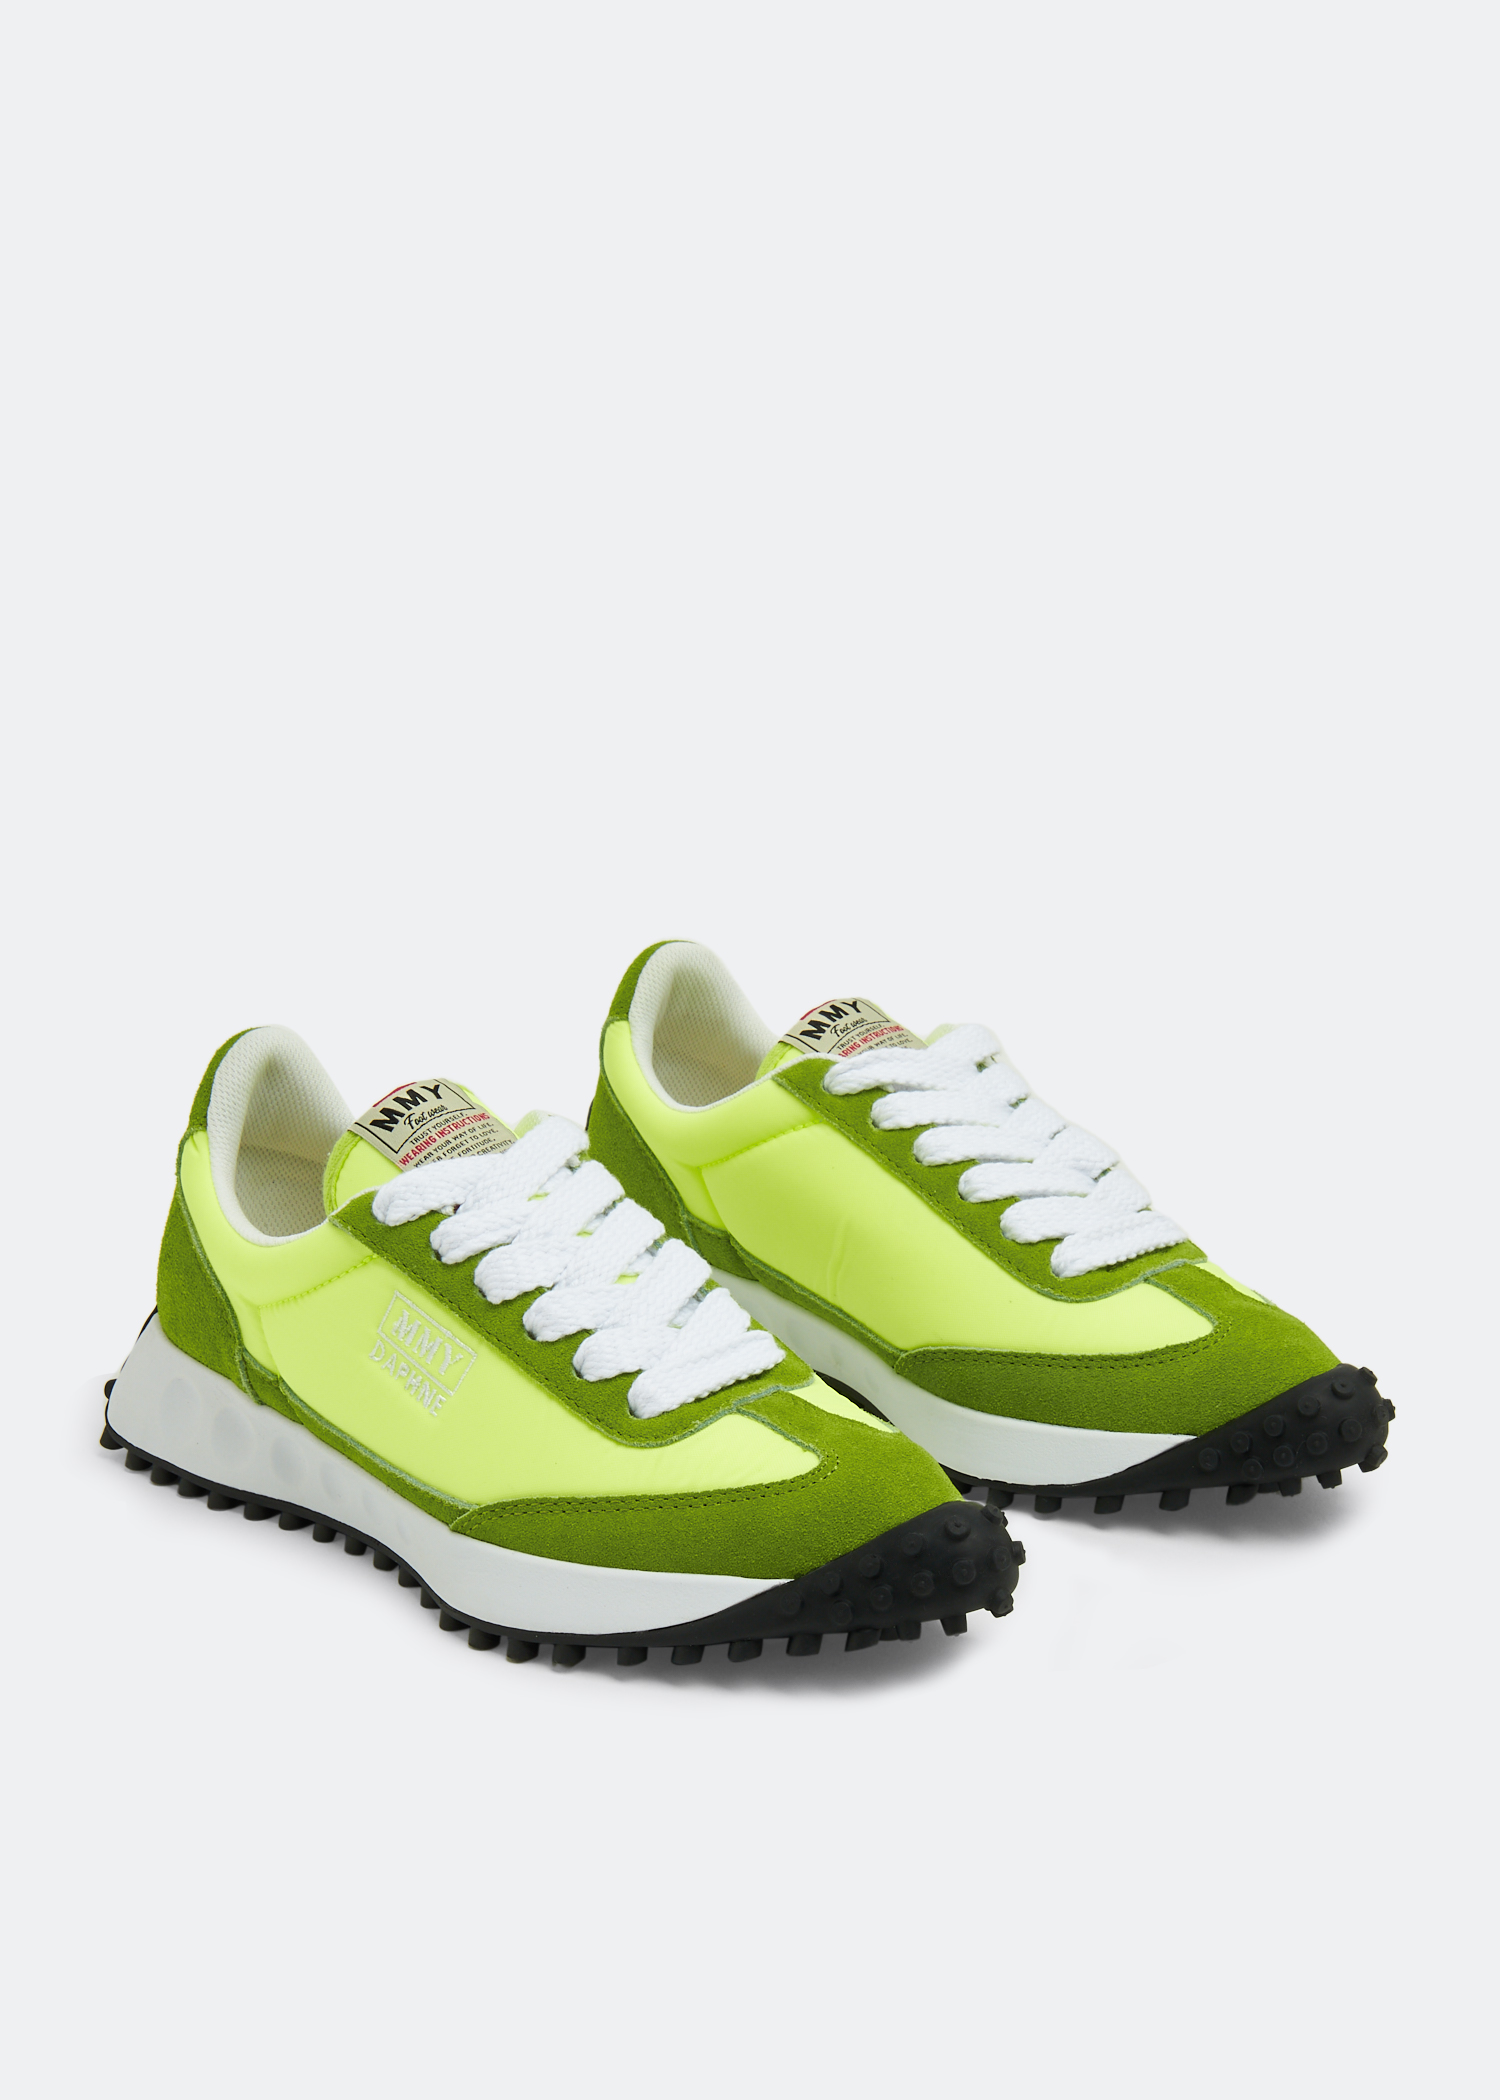 Maison Mihara Yasuhiro Daphne sneakers for Men - Green in UAE 